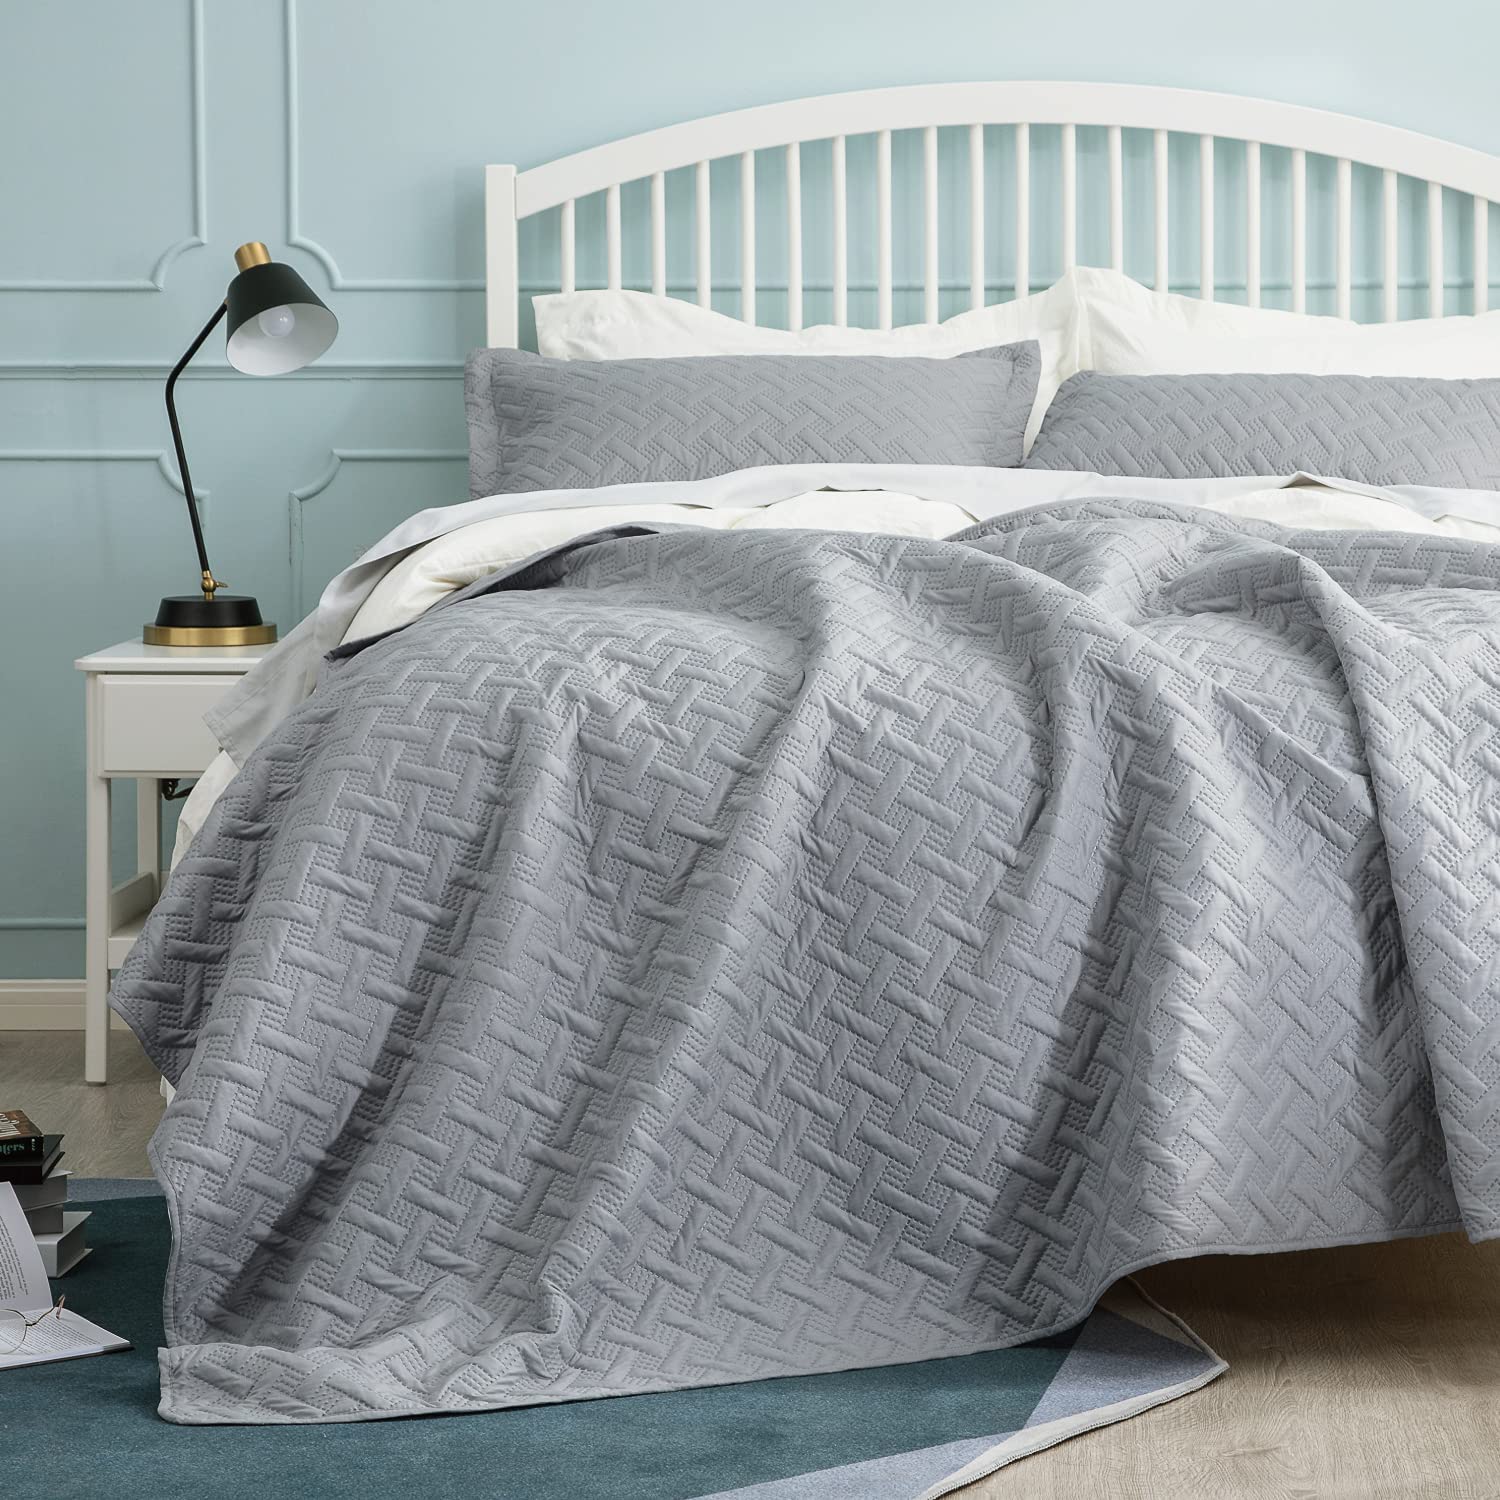 Sumptuous linens brand Bedsure picks top four ‘Amazon Choice’ bedding products for autumn 